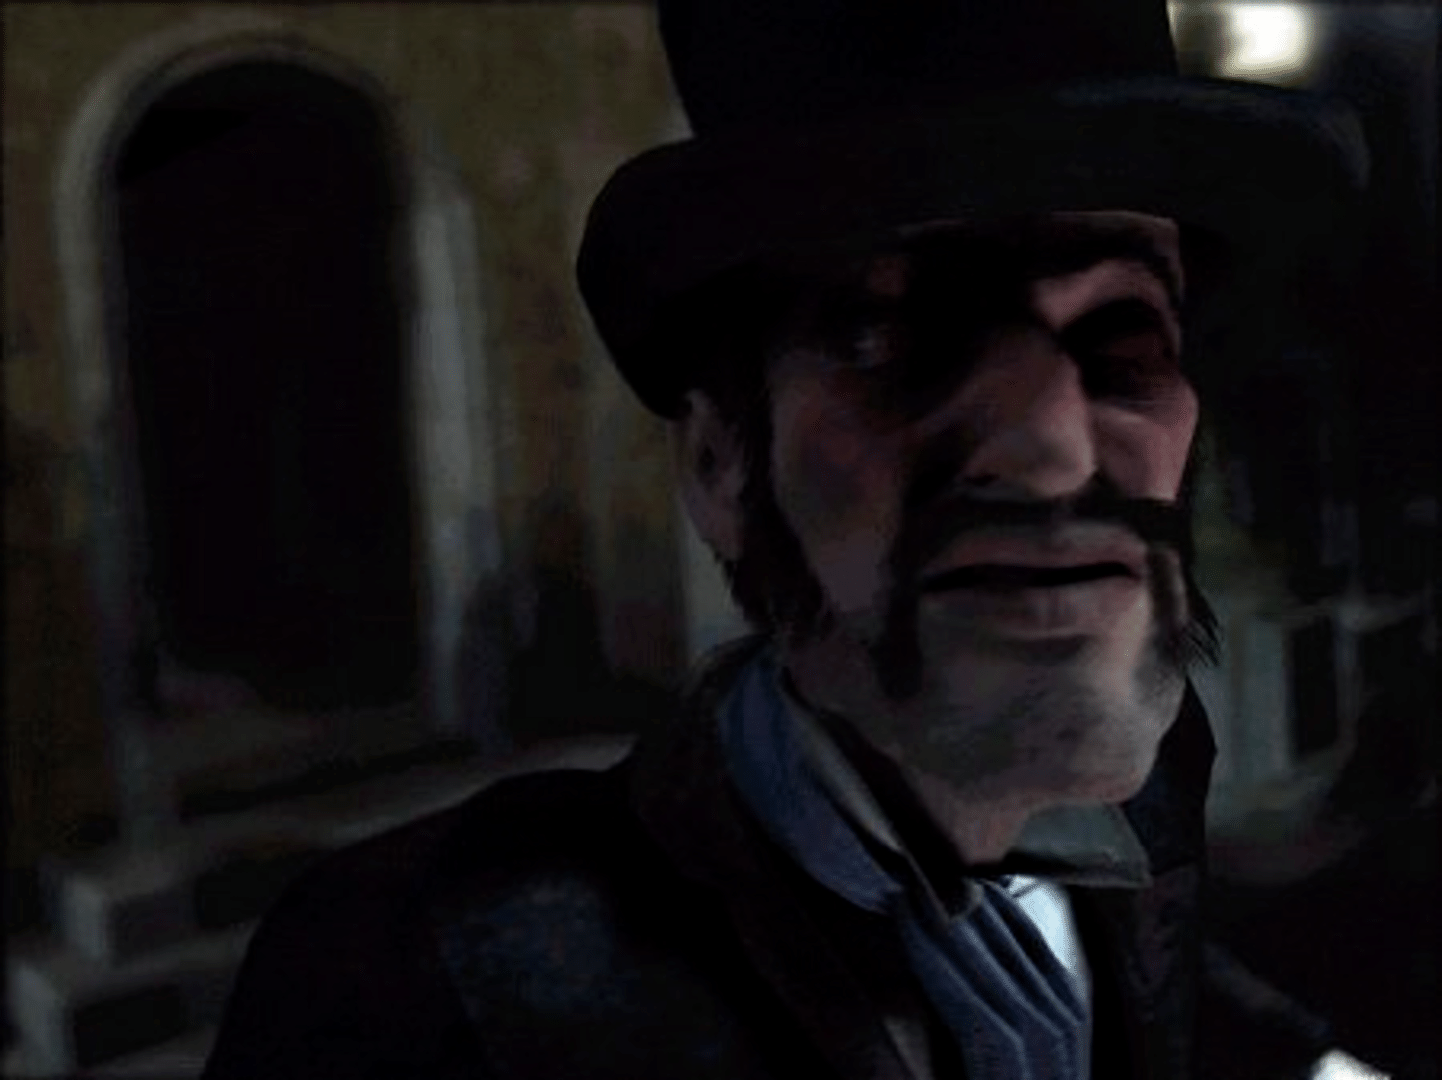 Dracula 2: The Last Sanctuary screenshot